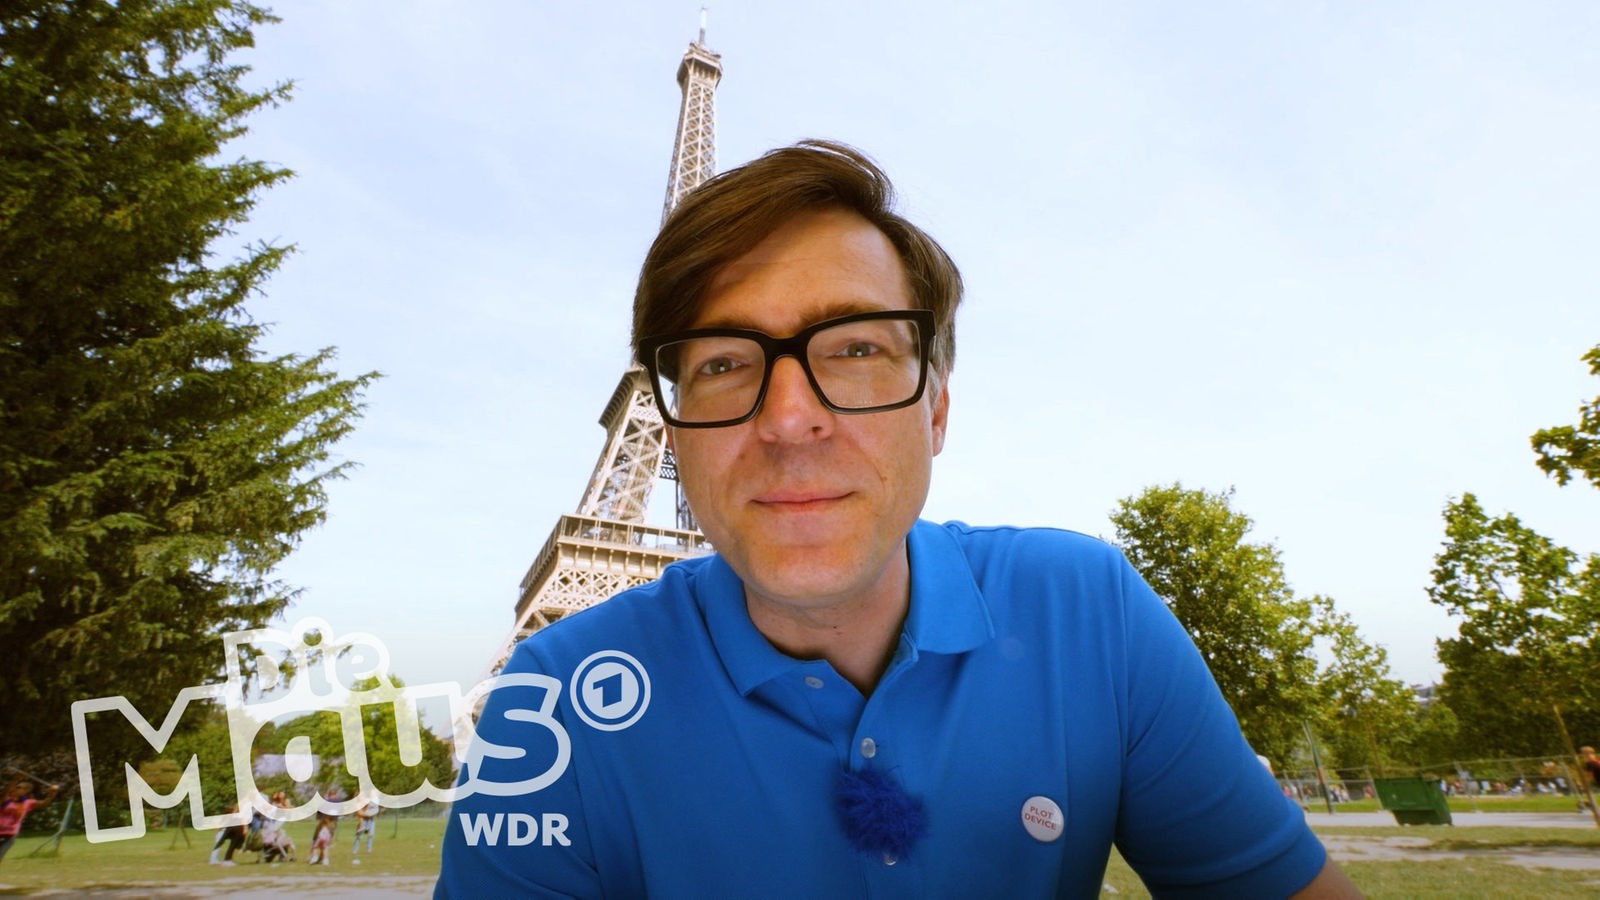  Ralph vor Eiffelturm